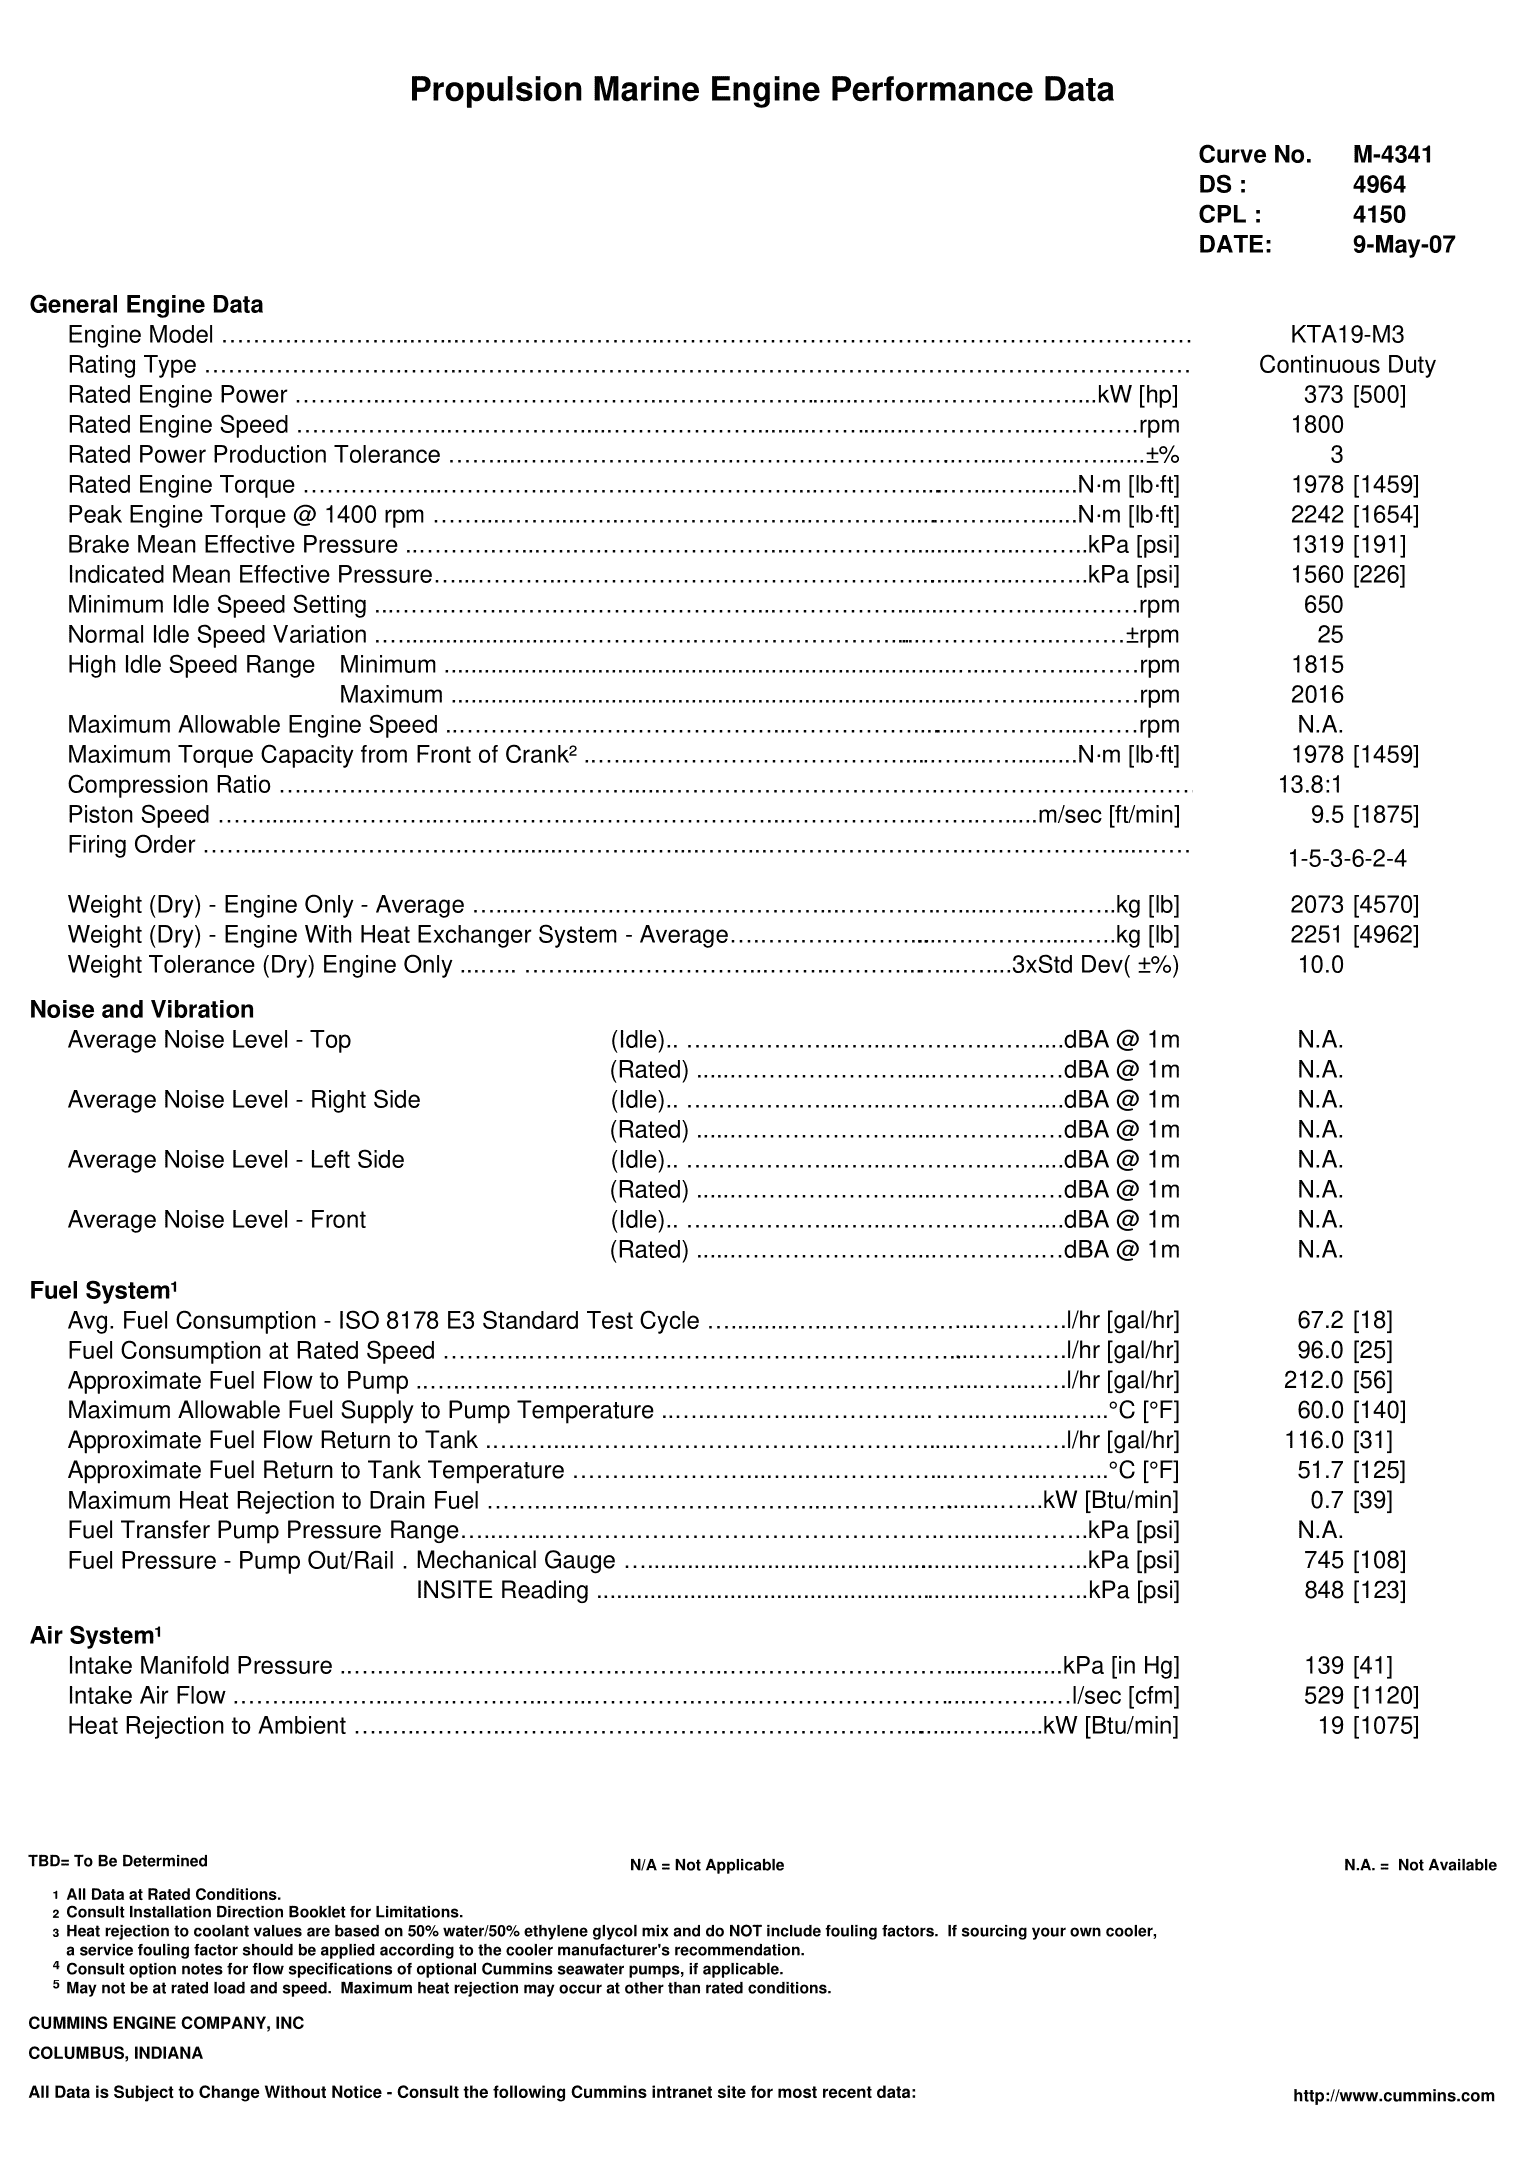 Cummins KTA19-M3 500 HP datasheet